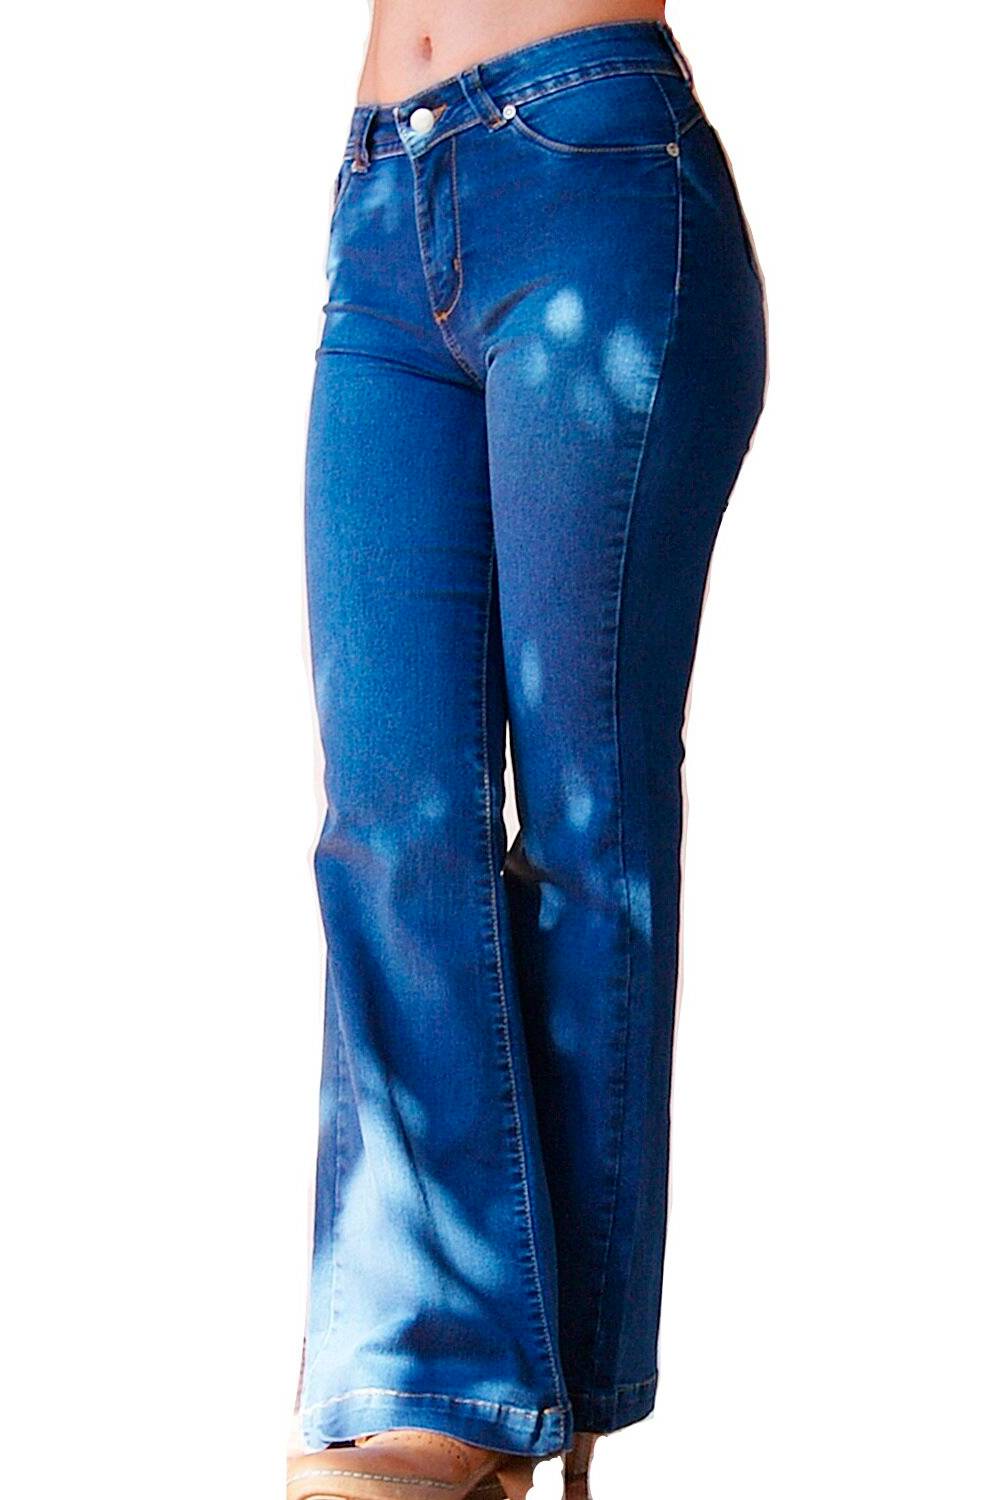 VIVAFELICIA - Jeans Hendrix Azul